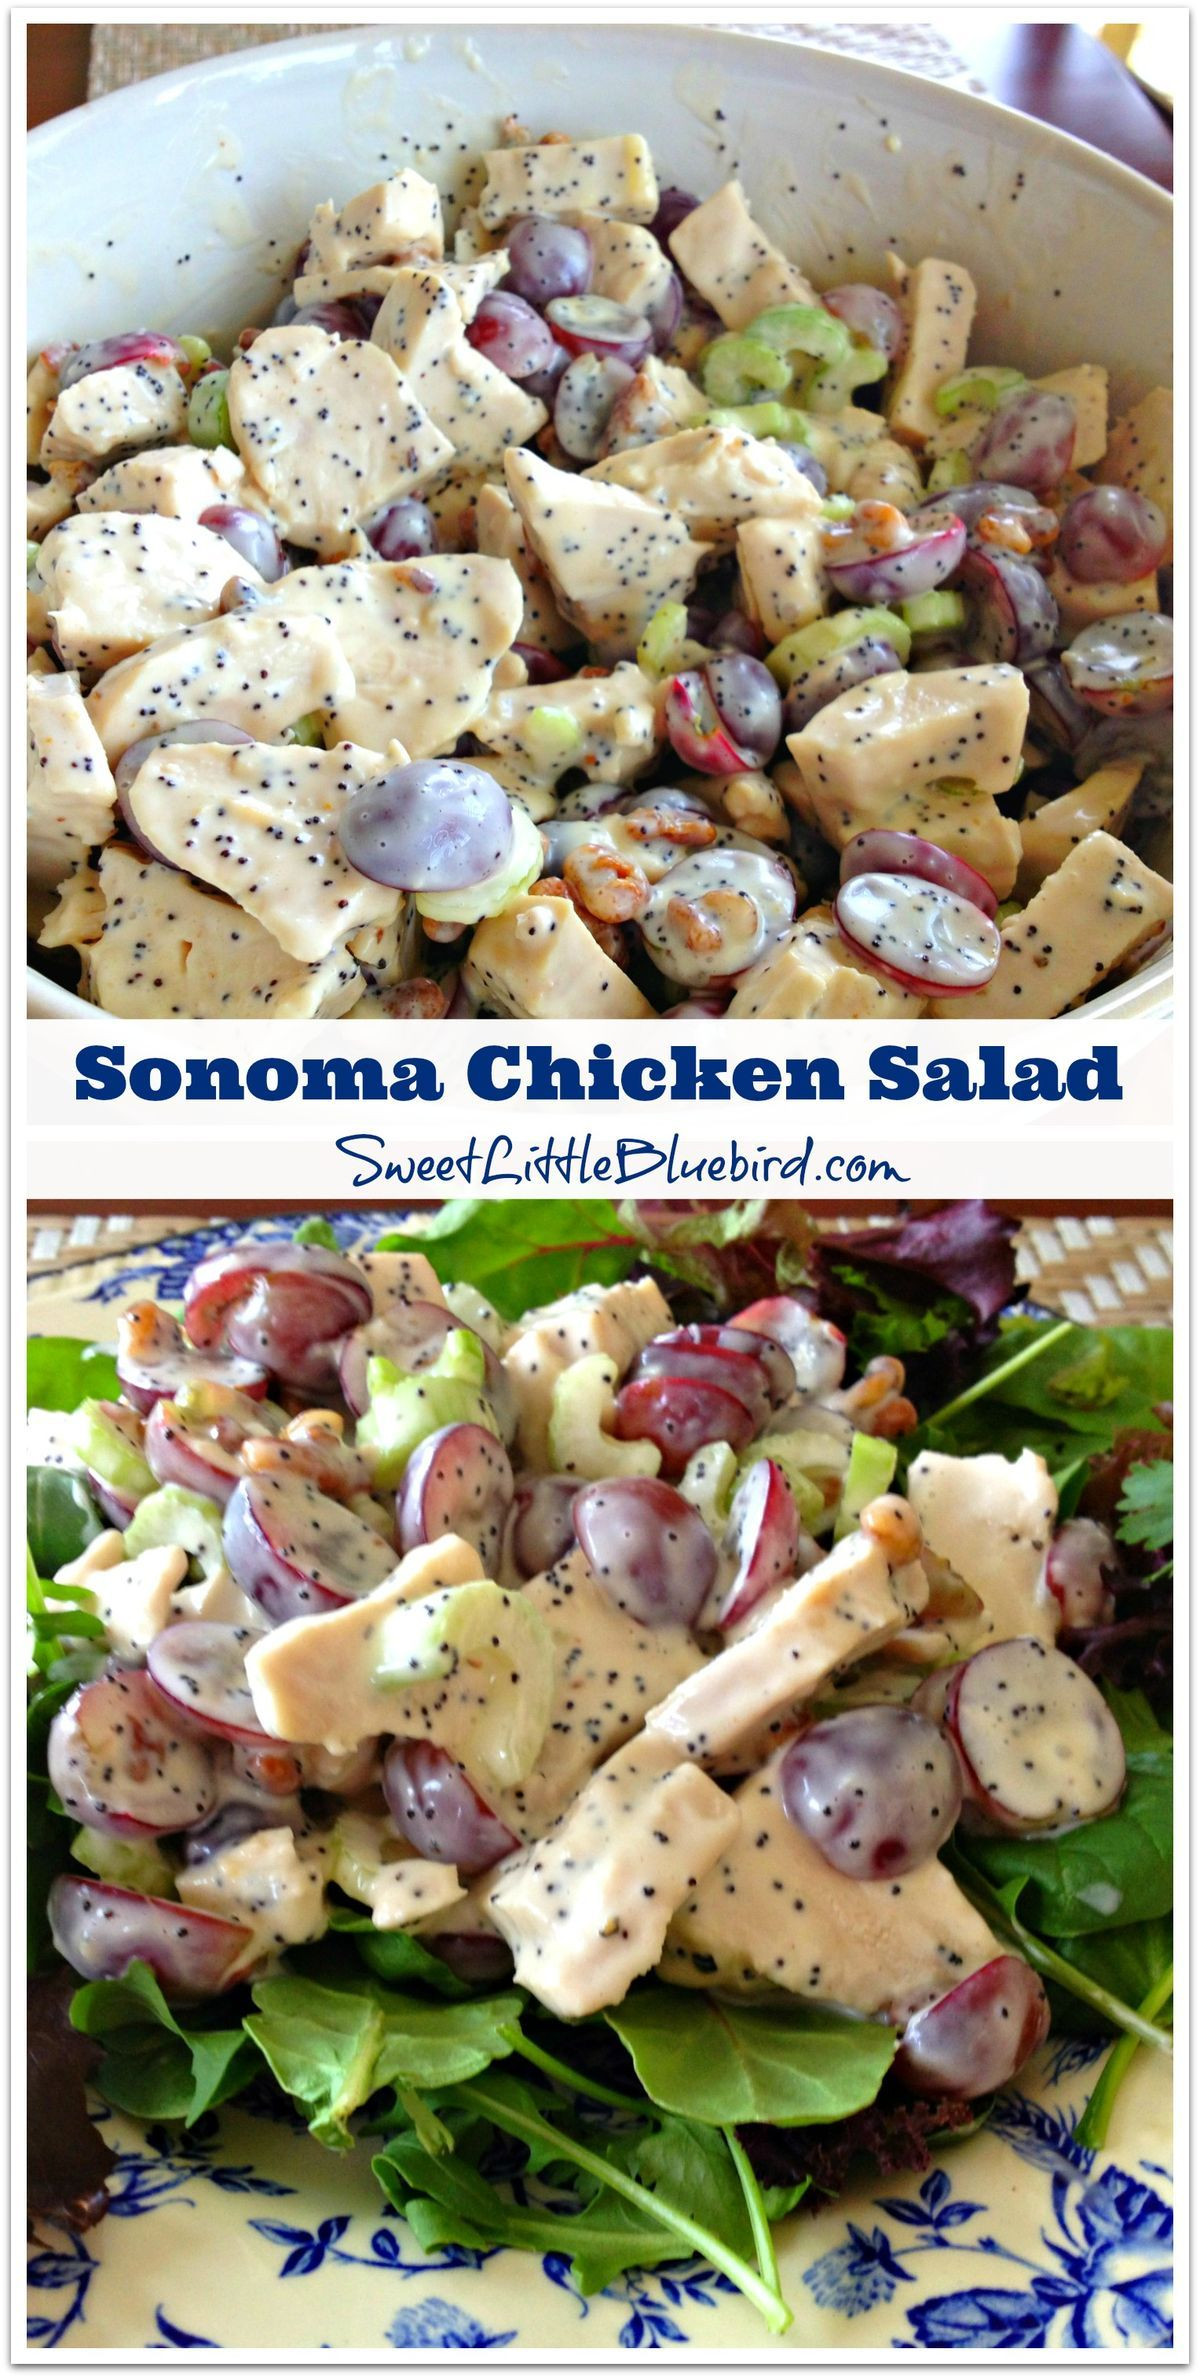 Sonoma Chicken Salad Recipe
 Sonoma Chicken Salad Recipe